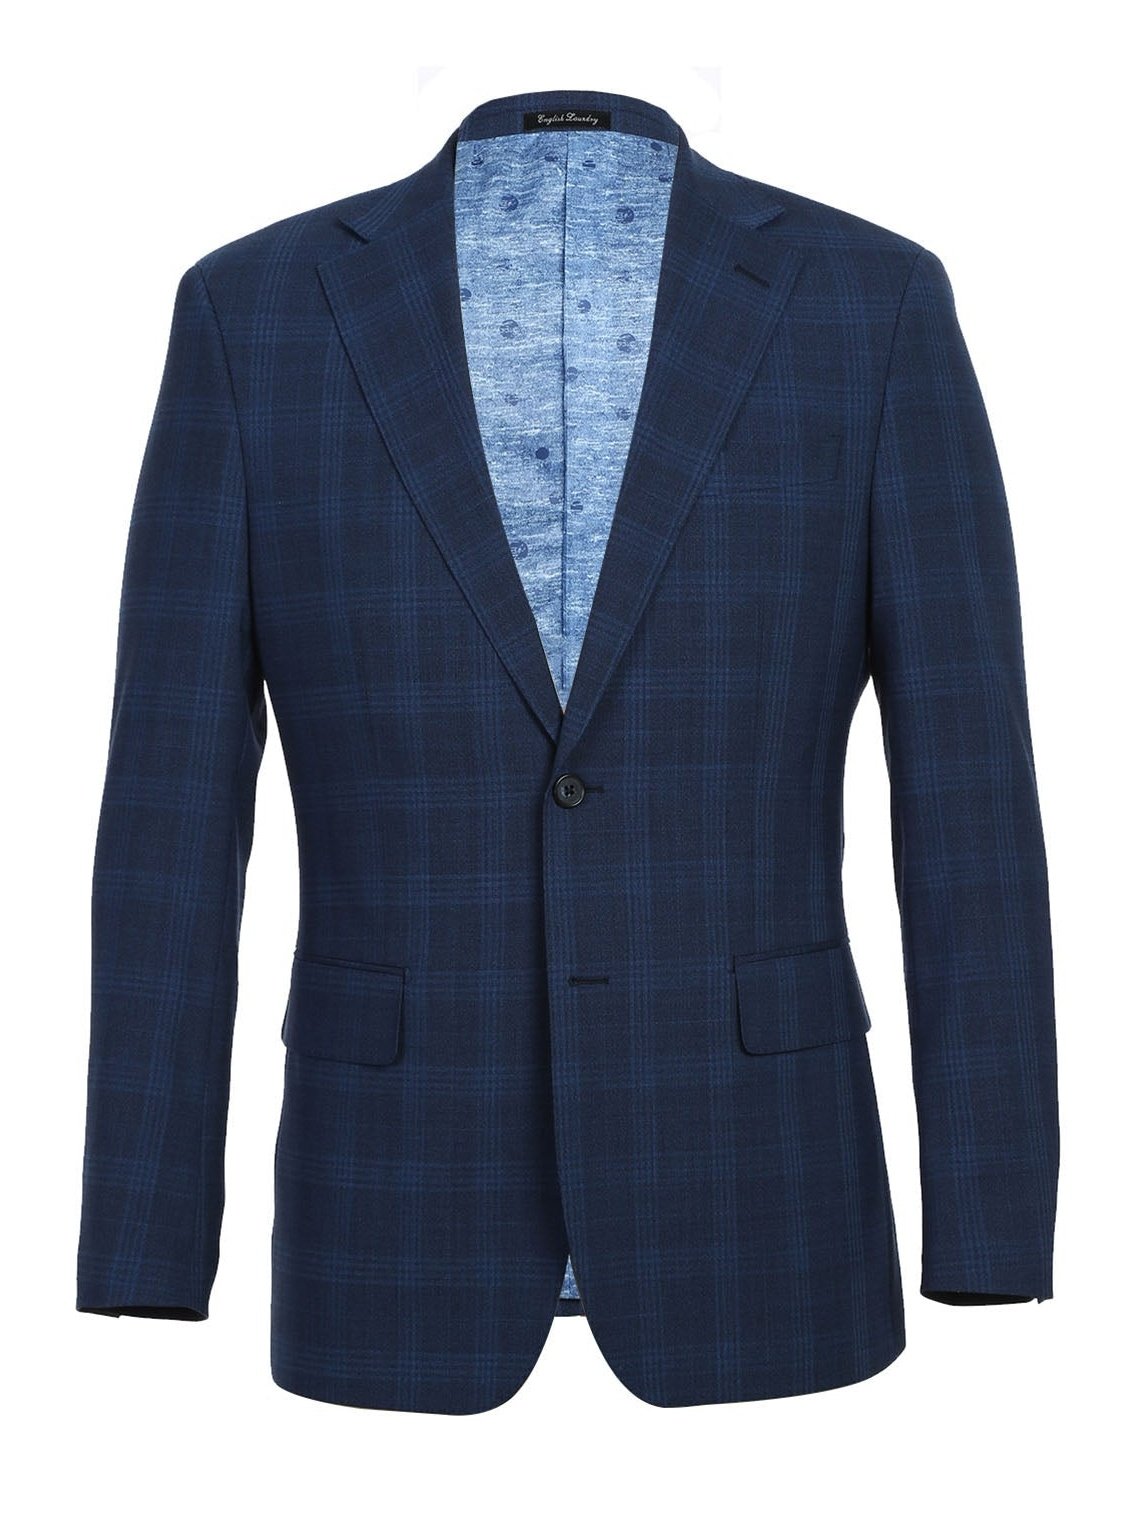 Airforce Blue Plaid Wool Suit